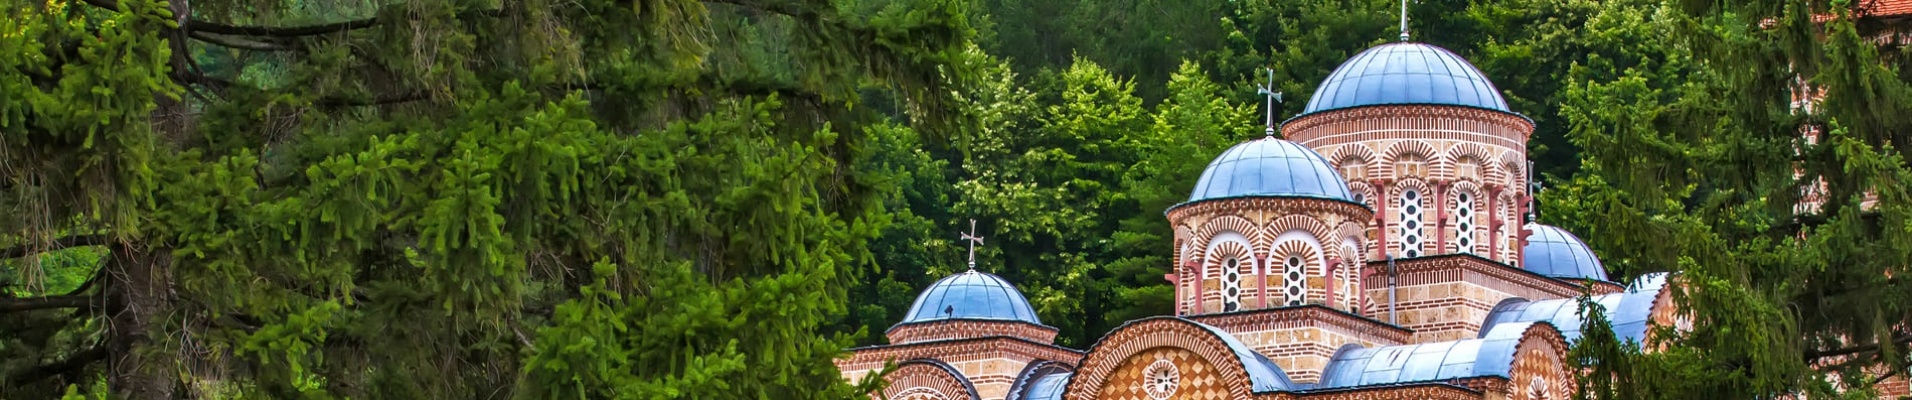 Eglise orthodoxe - Valjevo Serbie